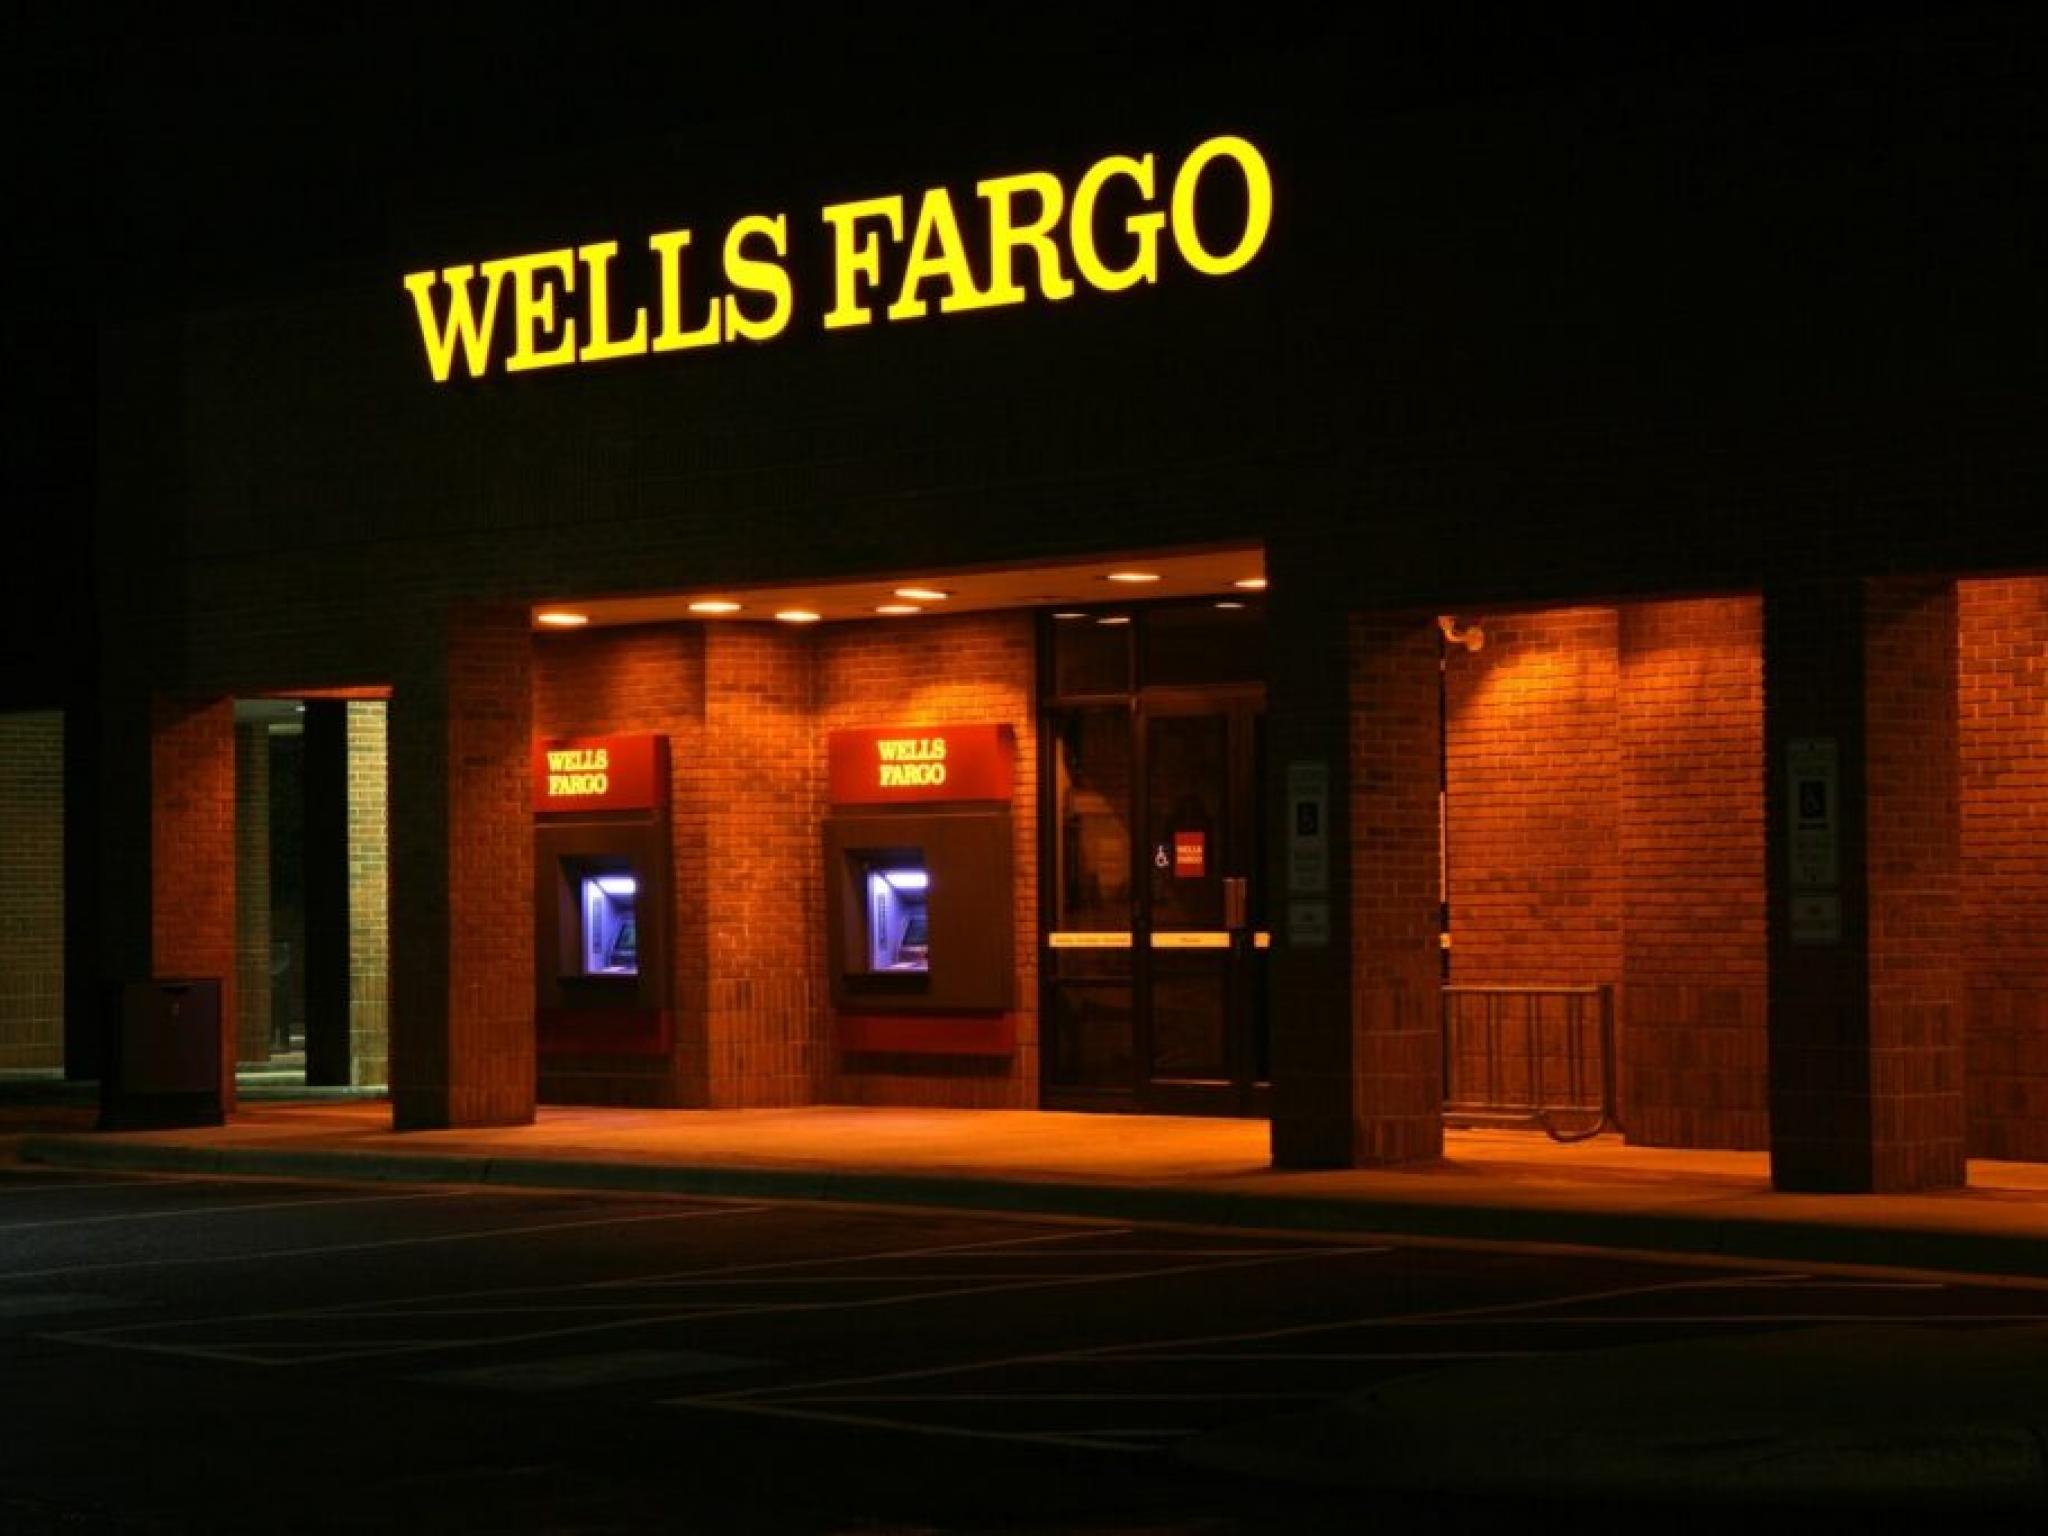  wells-fargo-unveils-new-business-credit-card-with-cash-rewards-details 